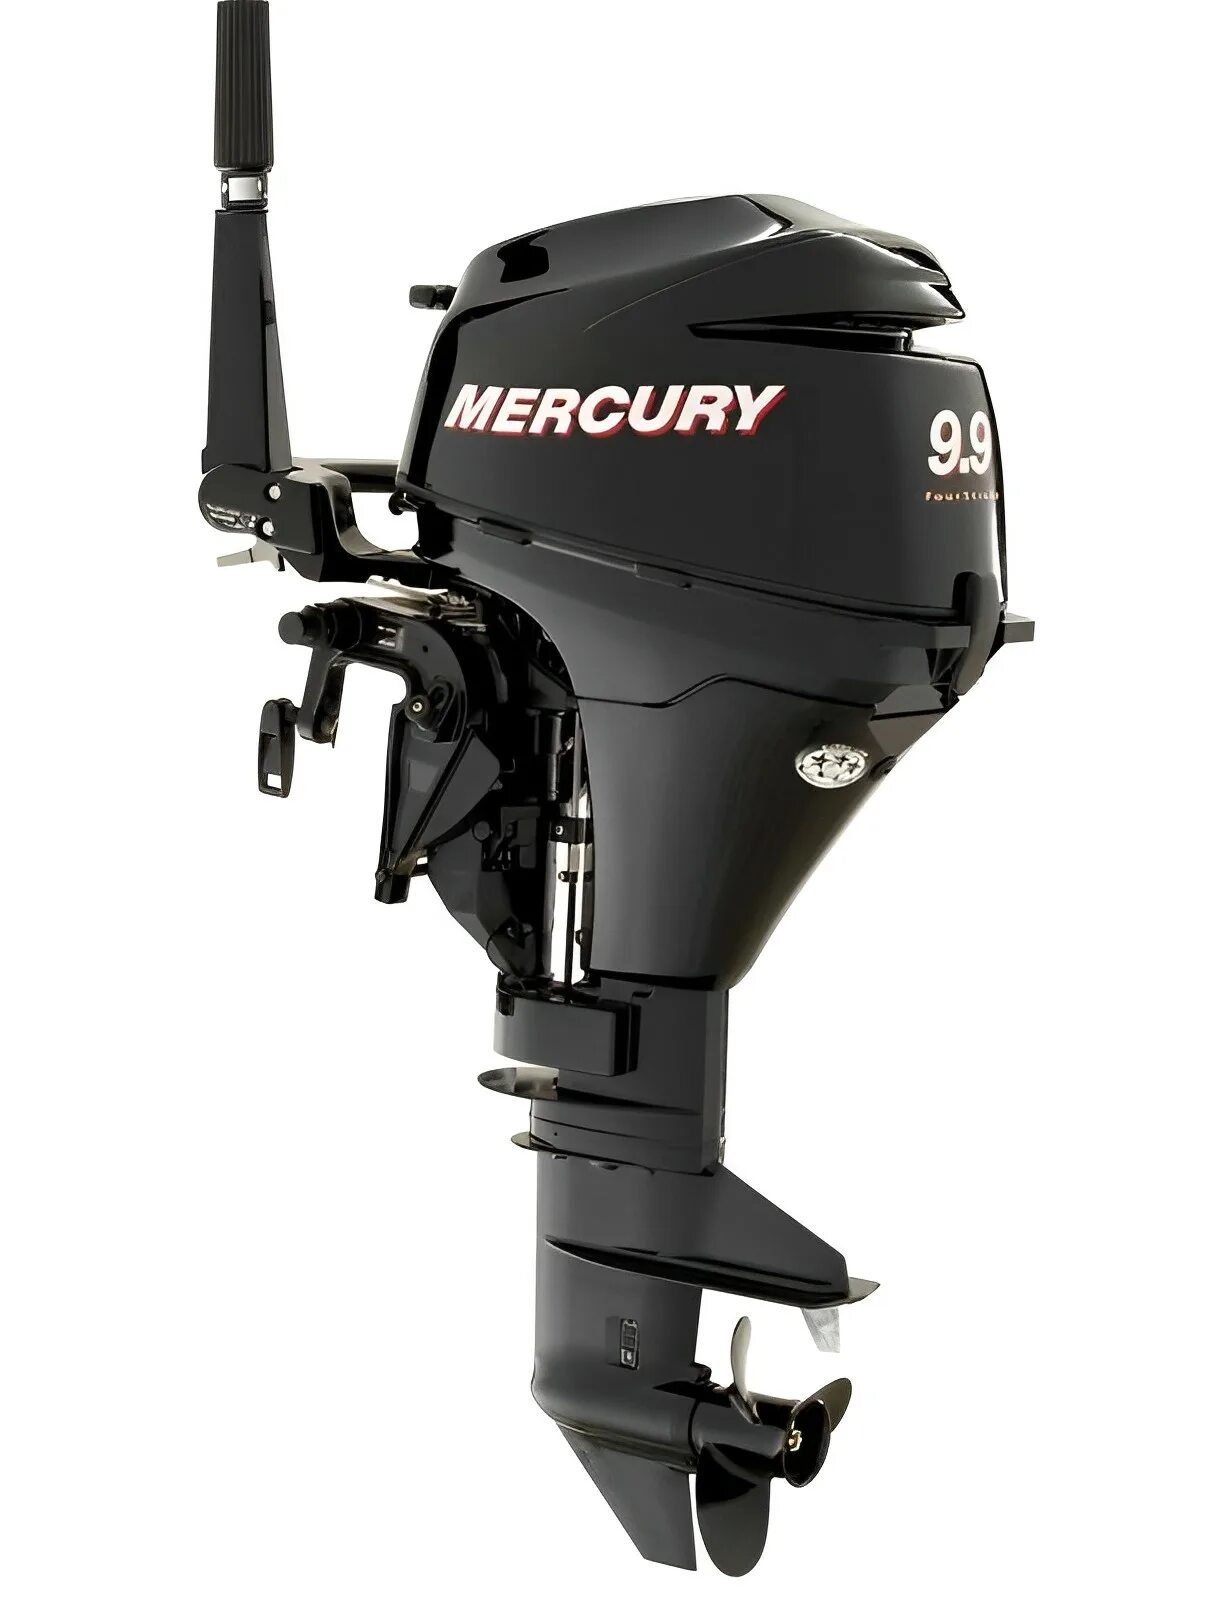 Мотор Mercury 9.9. Лодочный мотор Mercury me f 9.9 m. Лодочный мотор Mercury me f 8 m. Mercury 9.9 4х тактный. Купить лодочный мотор в вологде